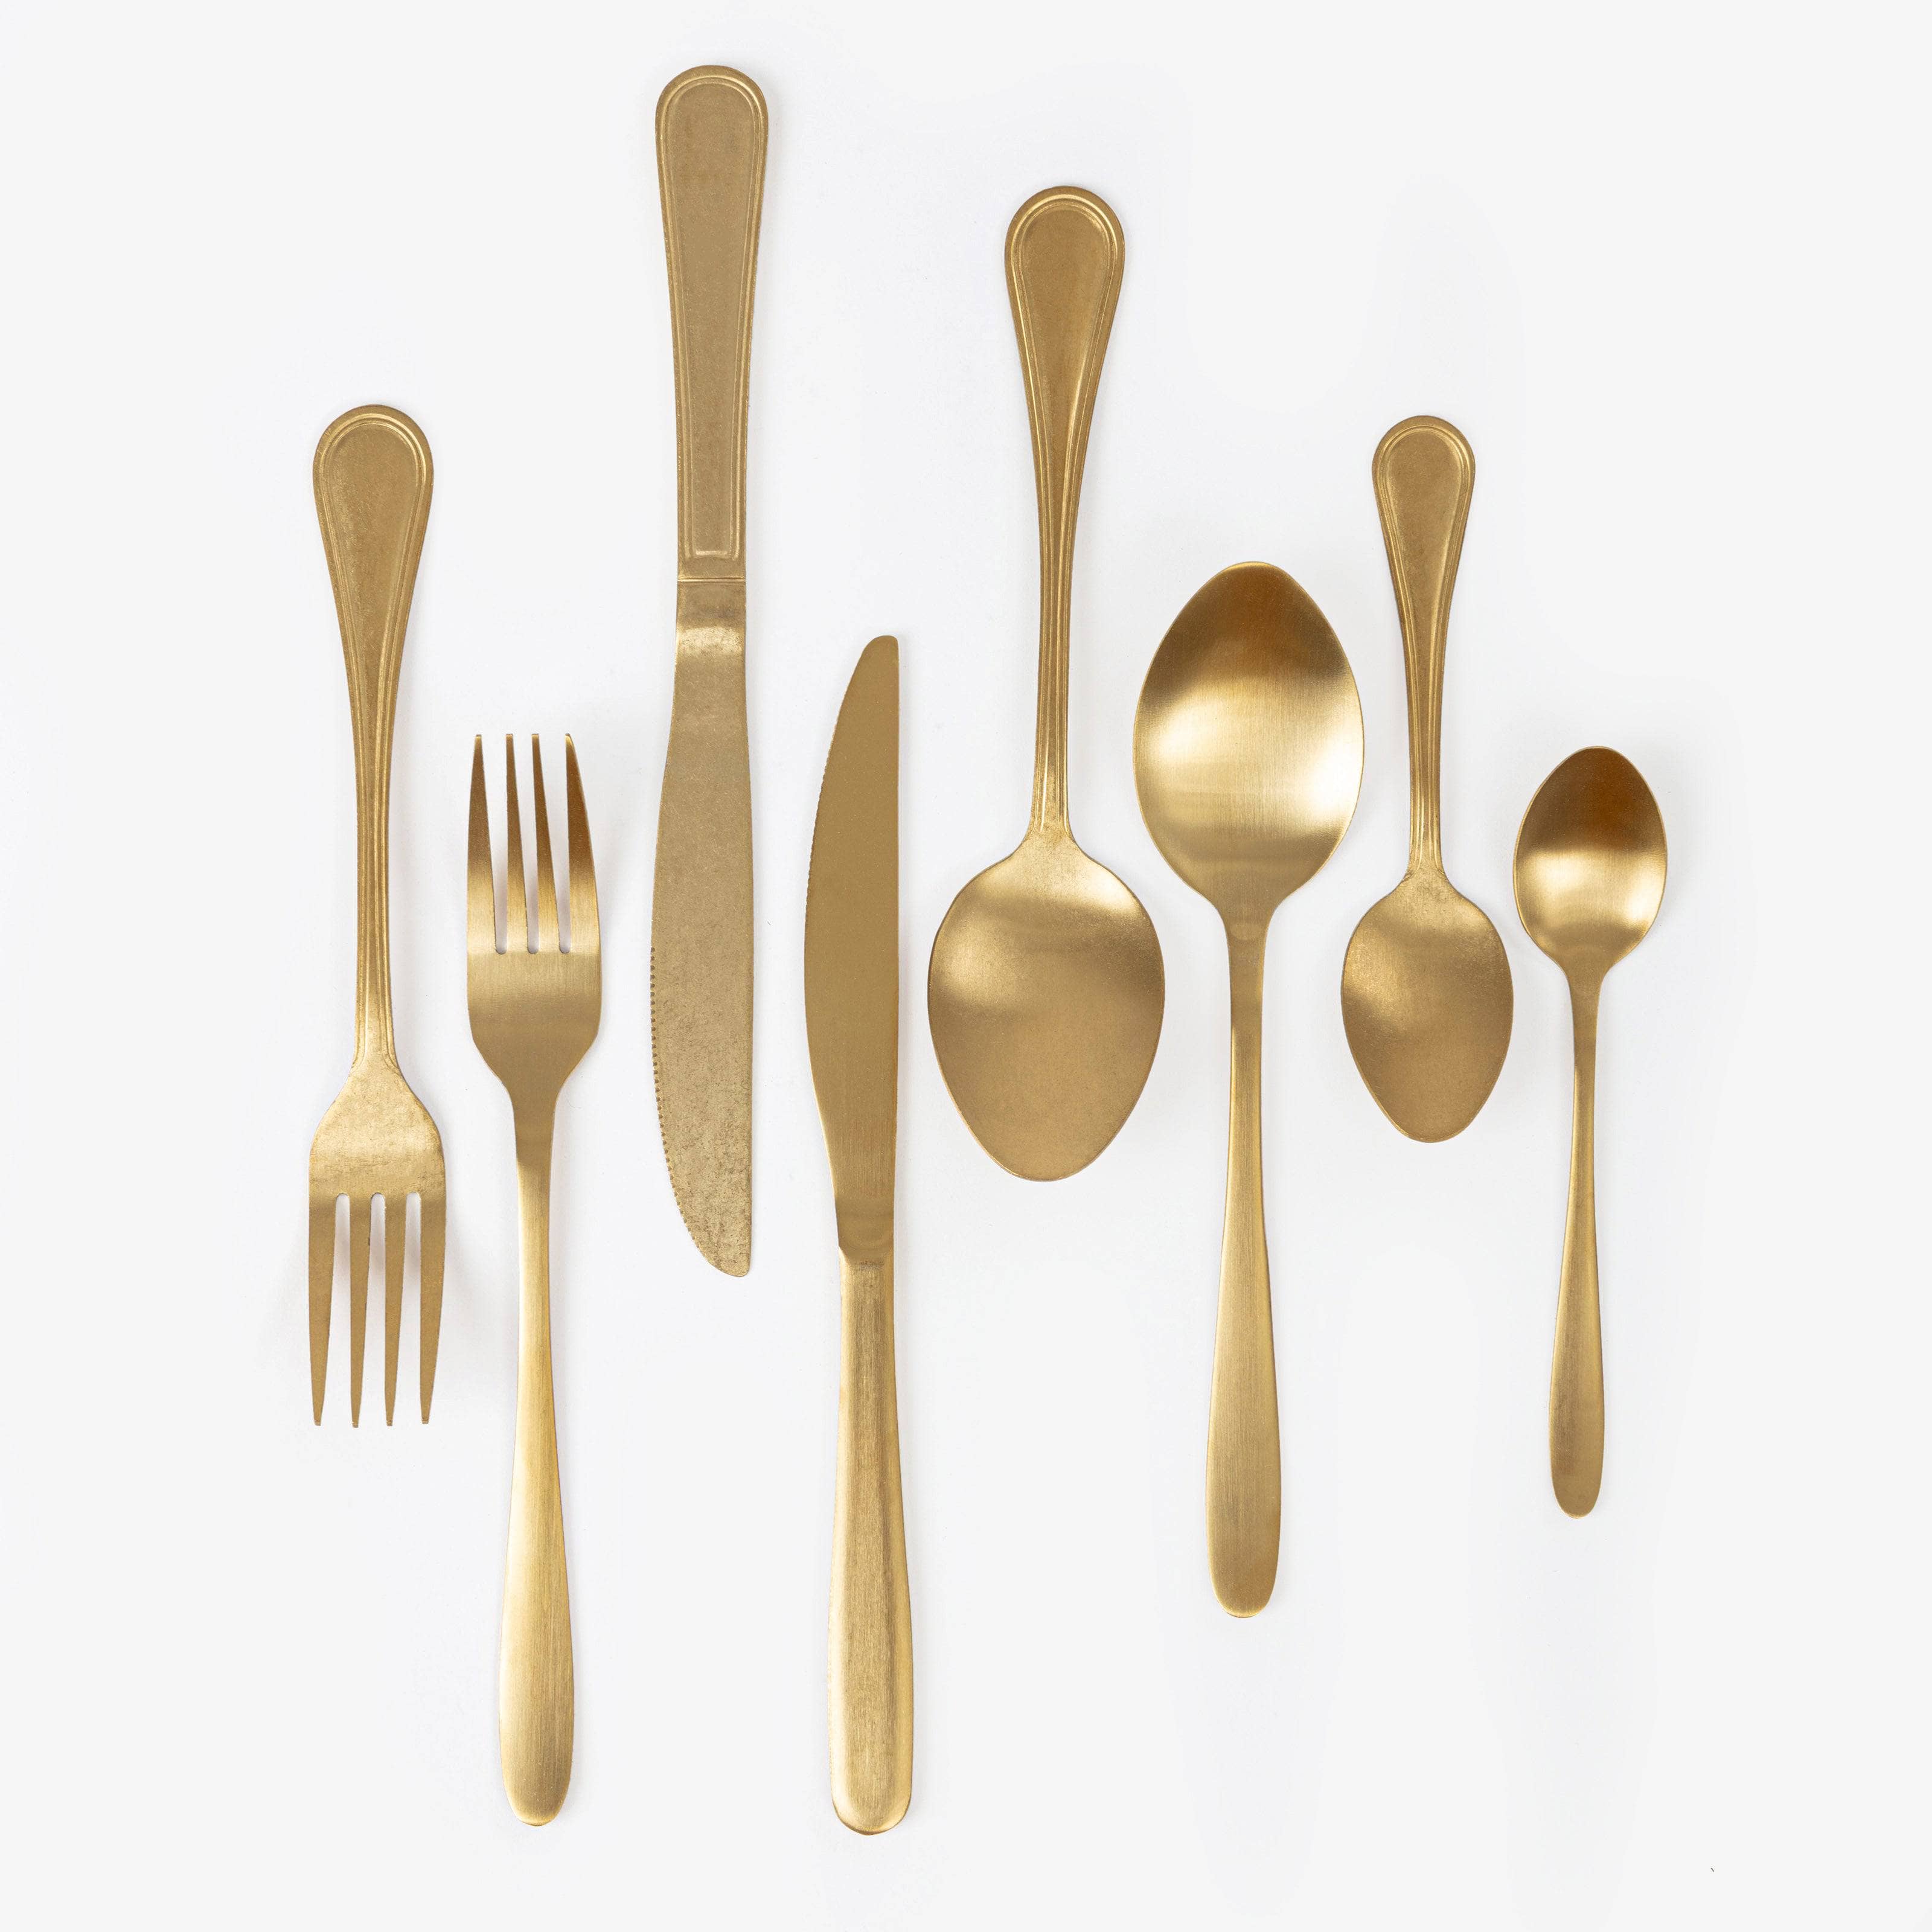 Bravo 16 Piece Stainless Steel Cutlery Set, Gold - 4